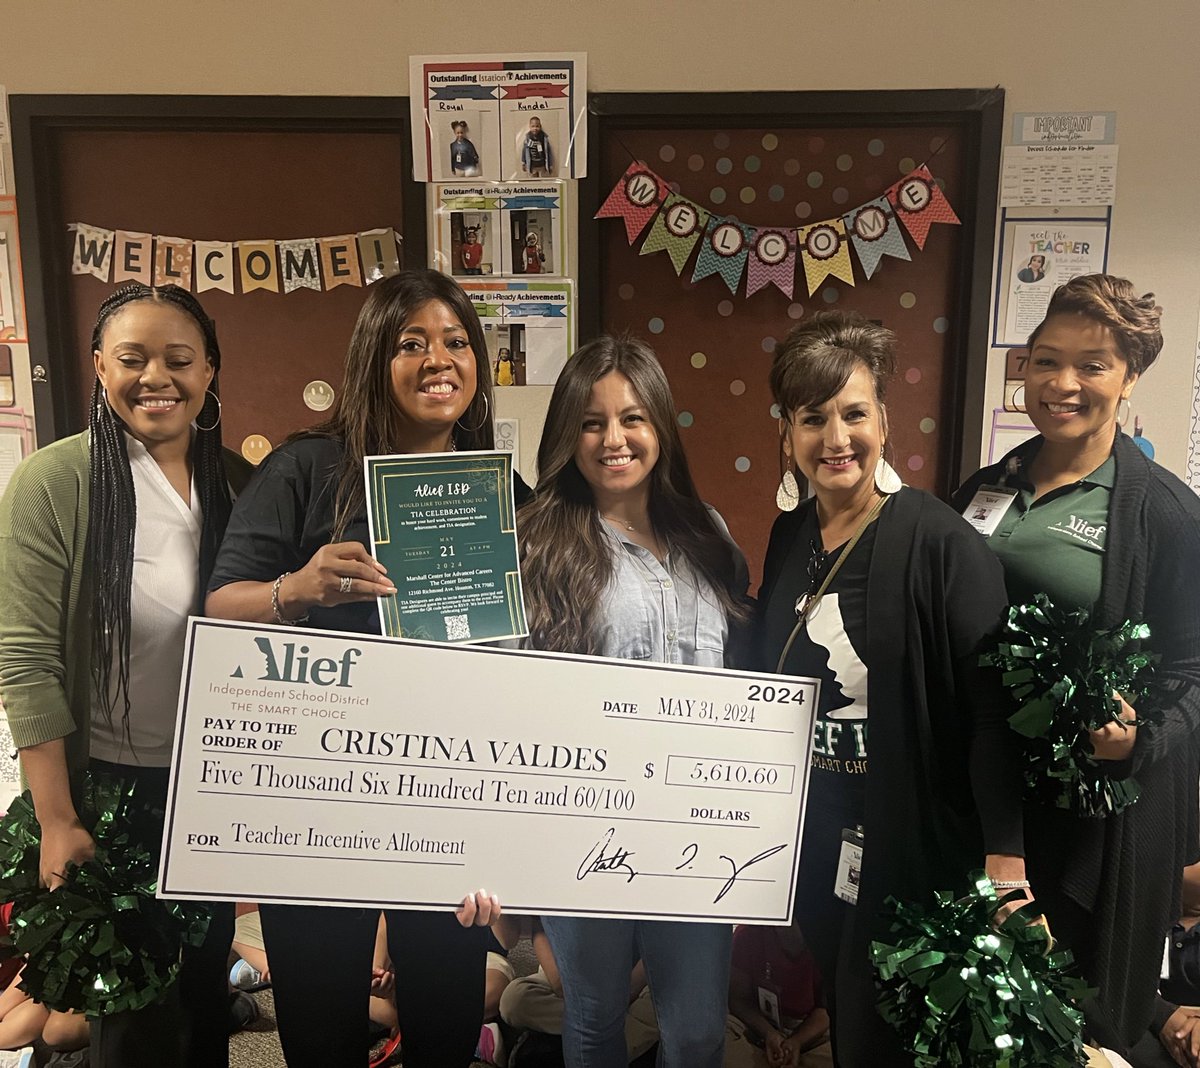 Celebrating Alief TOY Christina Valdes! She received a TIA RECOGNIZED Designation! @OutleyE @AlieISD @AliefISDHR #AliefTIA #TeacherIncidentOfAllotment